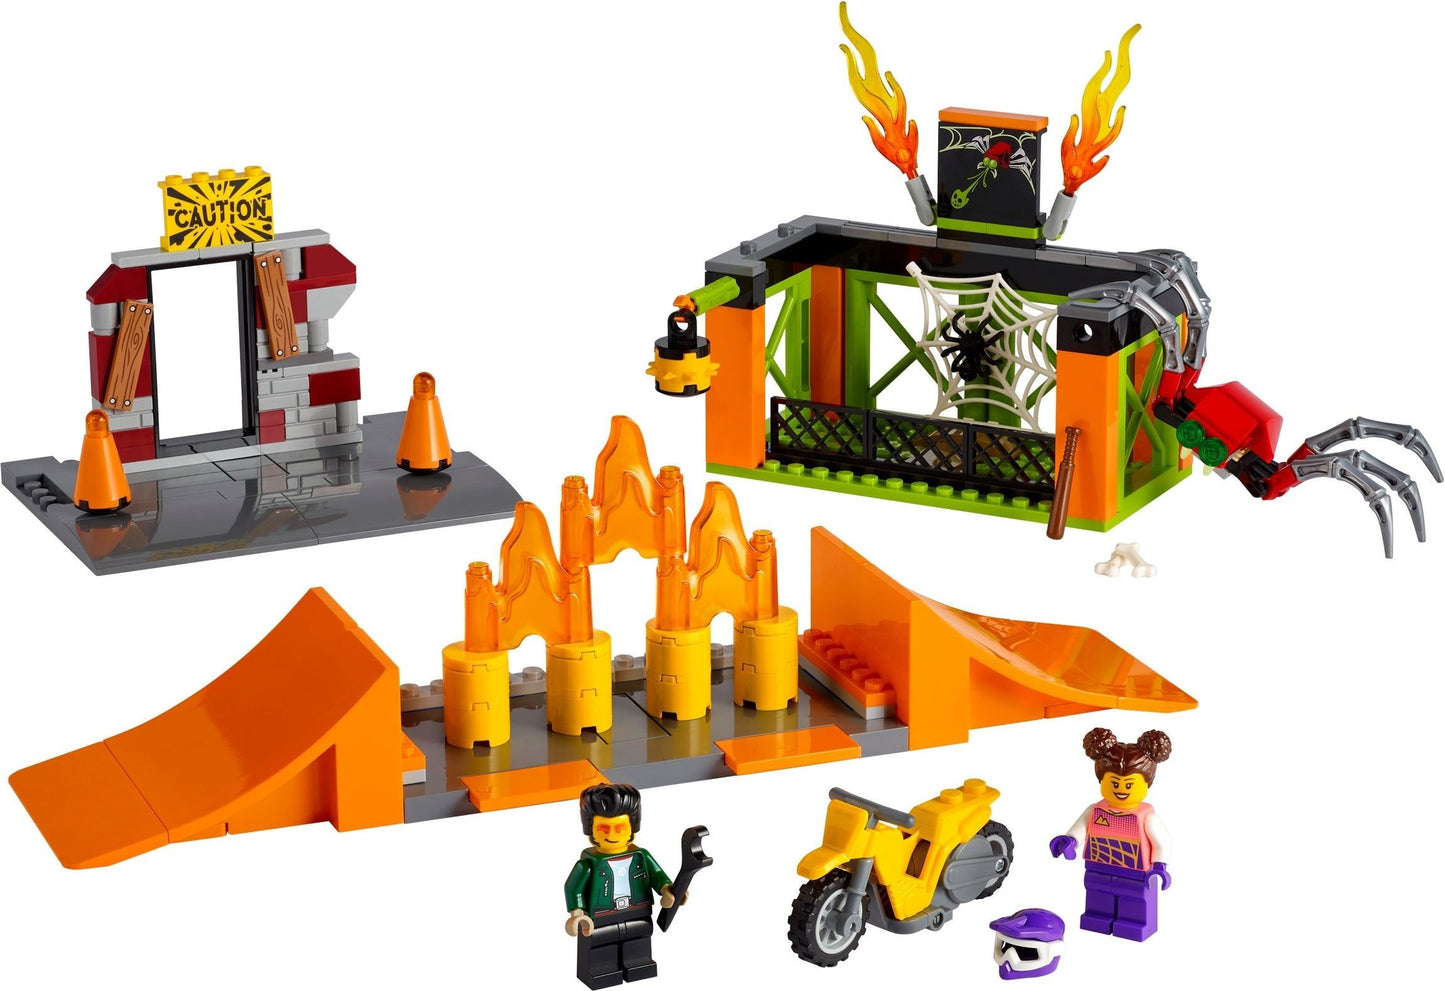 LEGO City Stuntz - Parc de cascadorii 60293, 170 piese